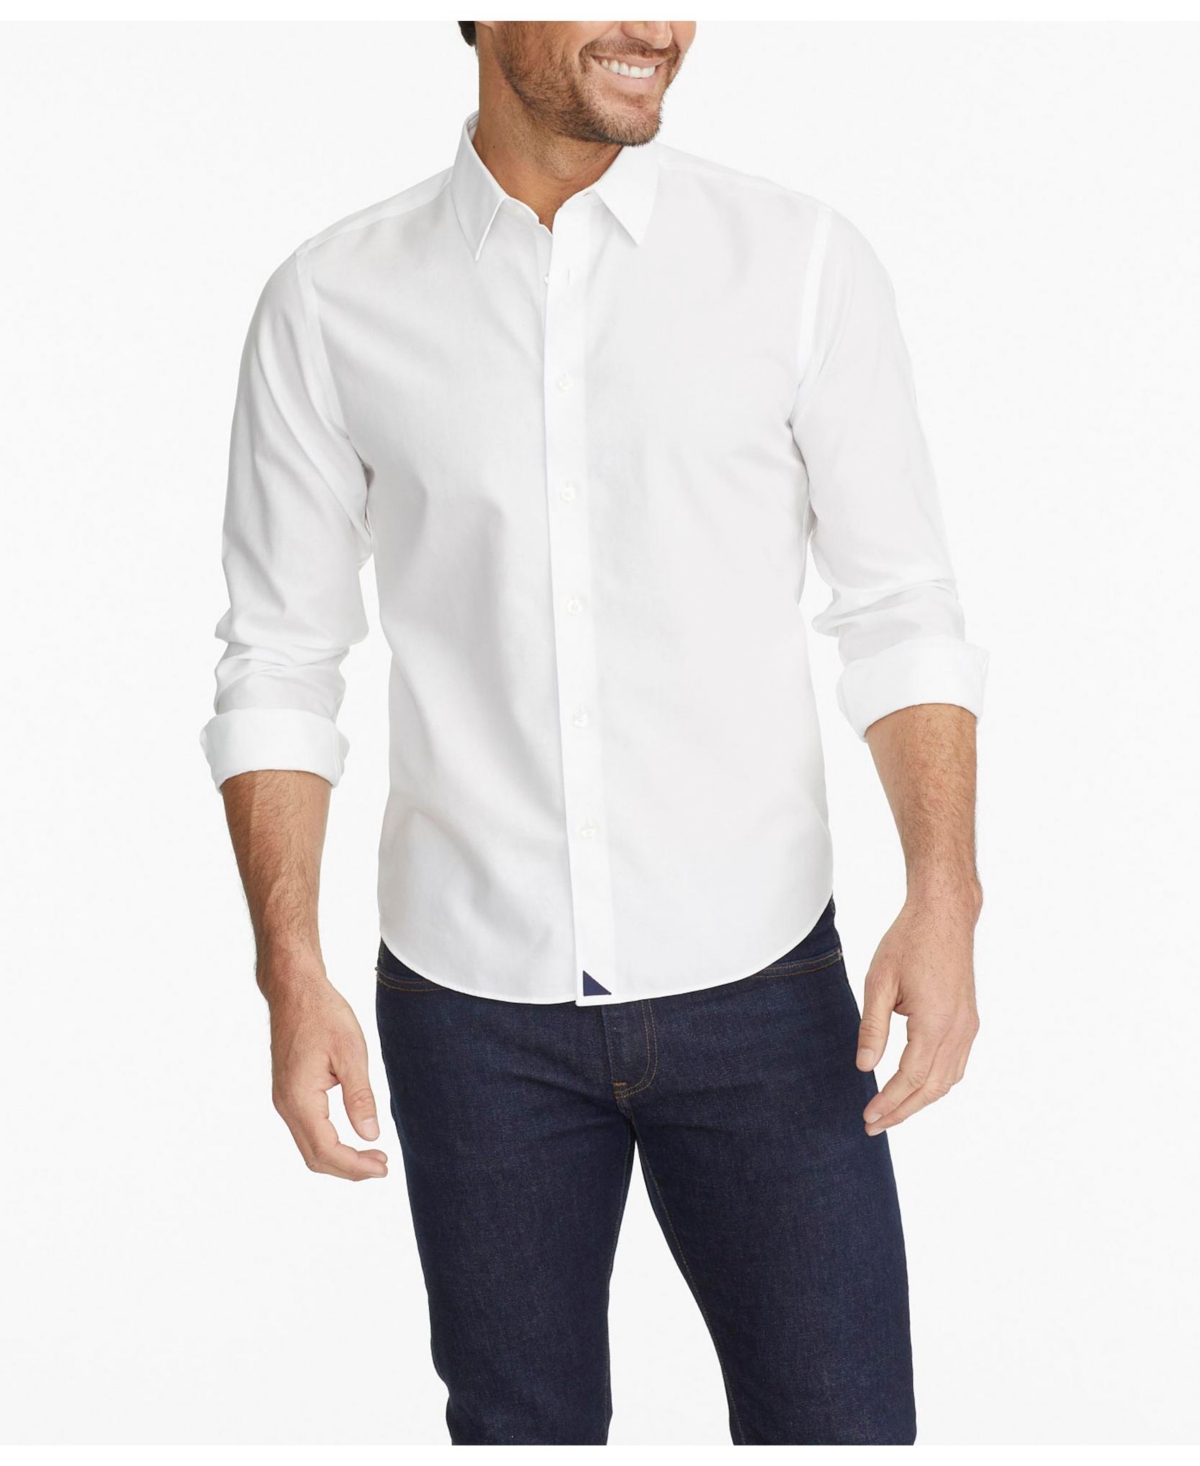 Untuck it Men's Slim Fit Wrinkle-Free Las Cases Button Up Shirt - White